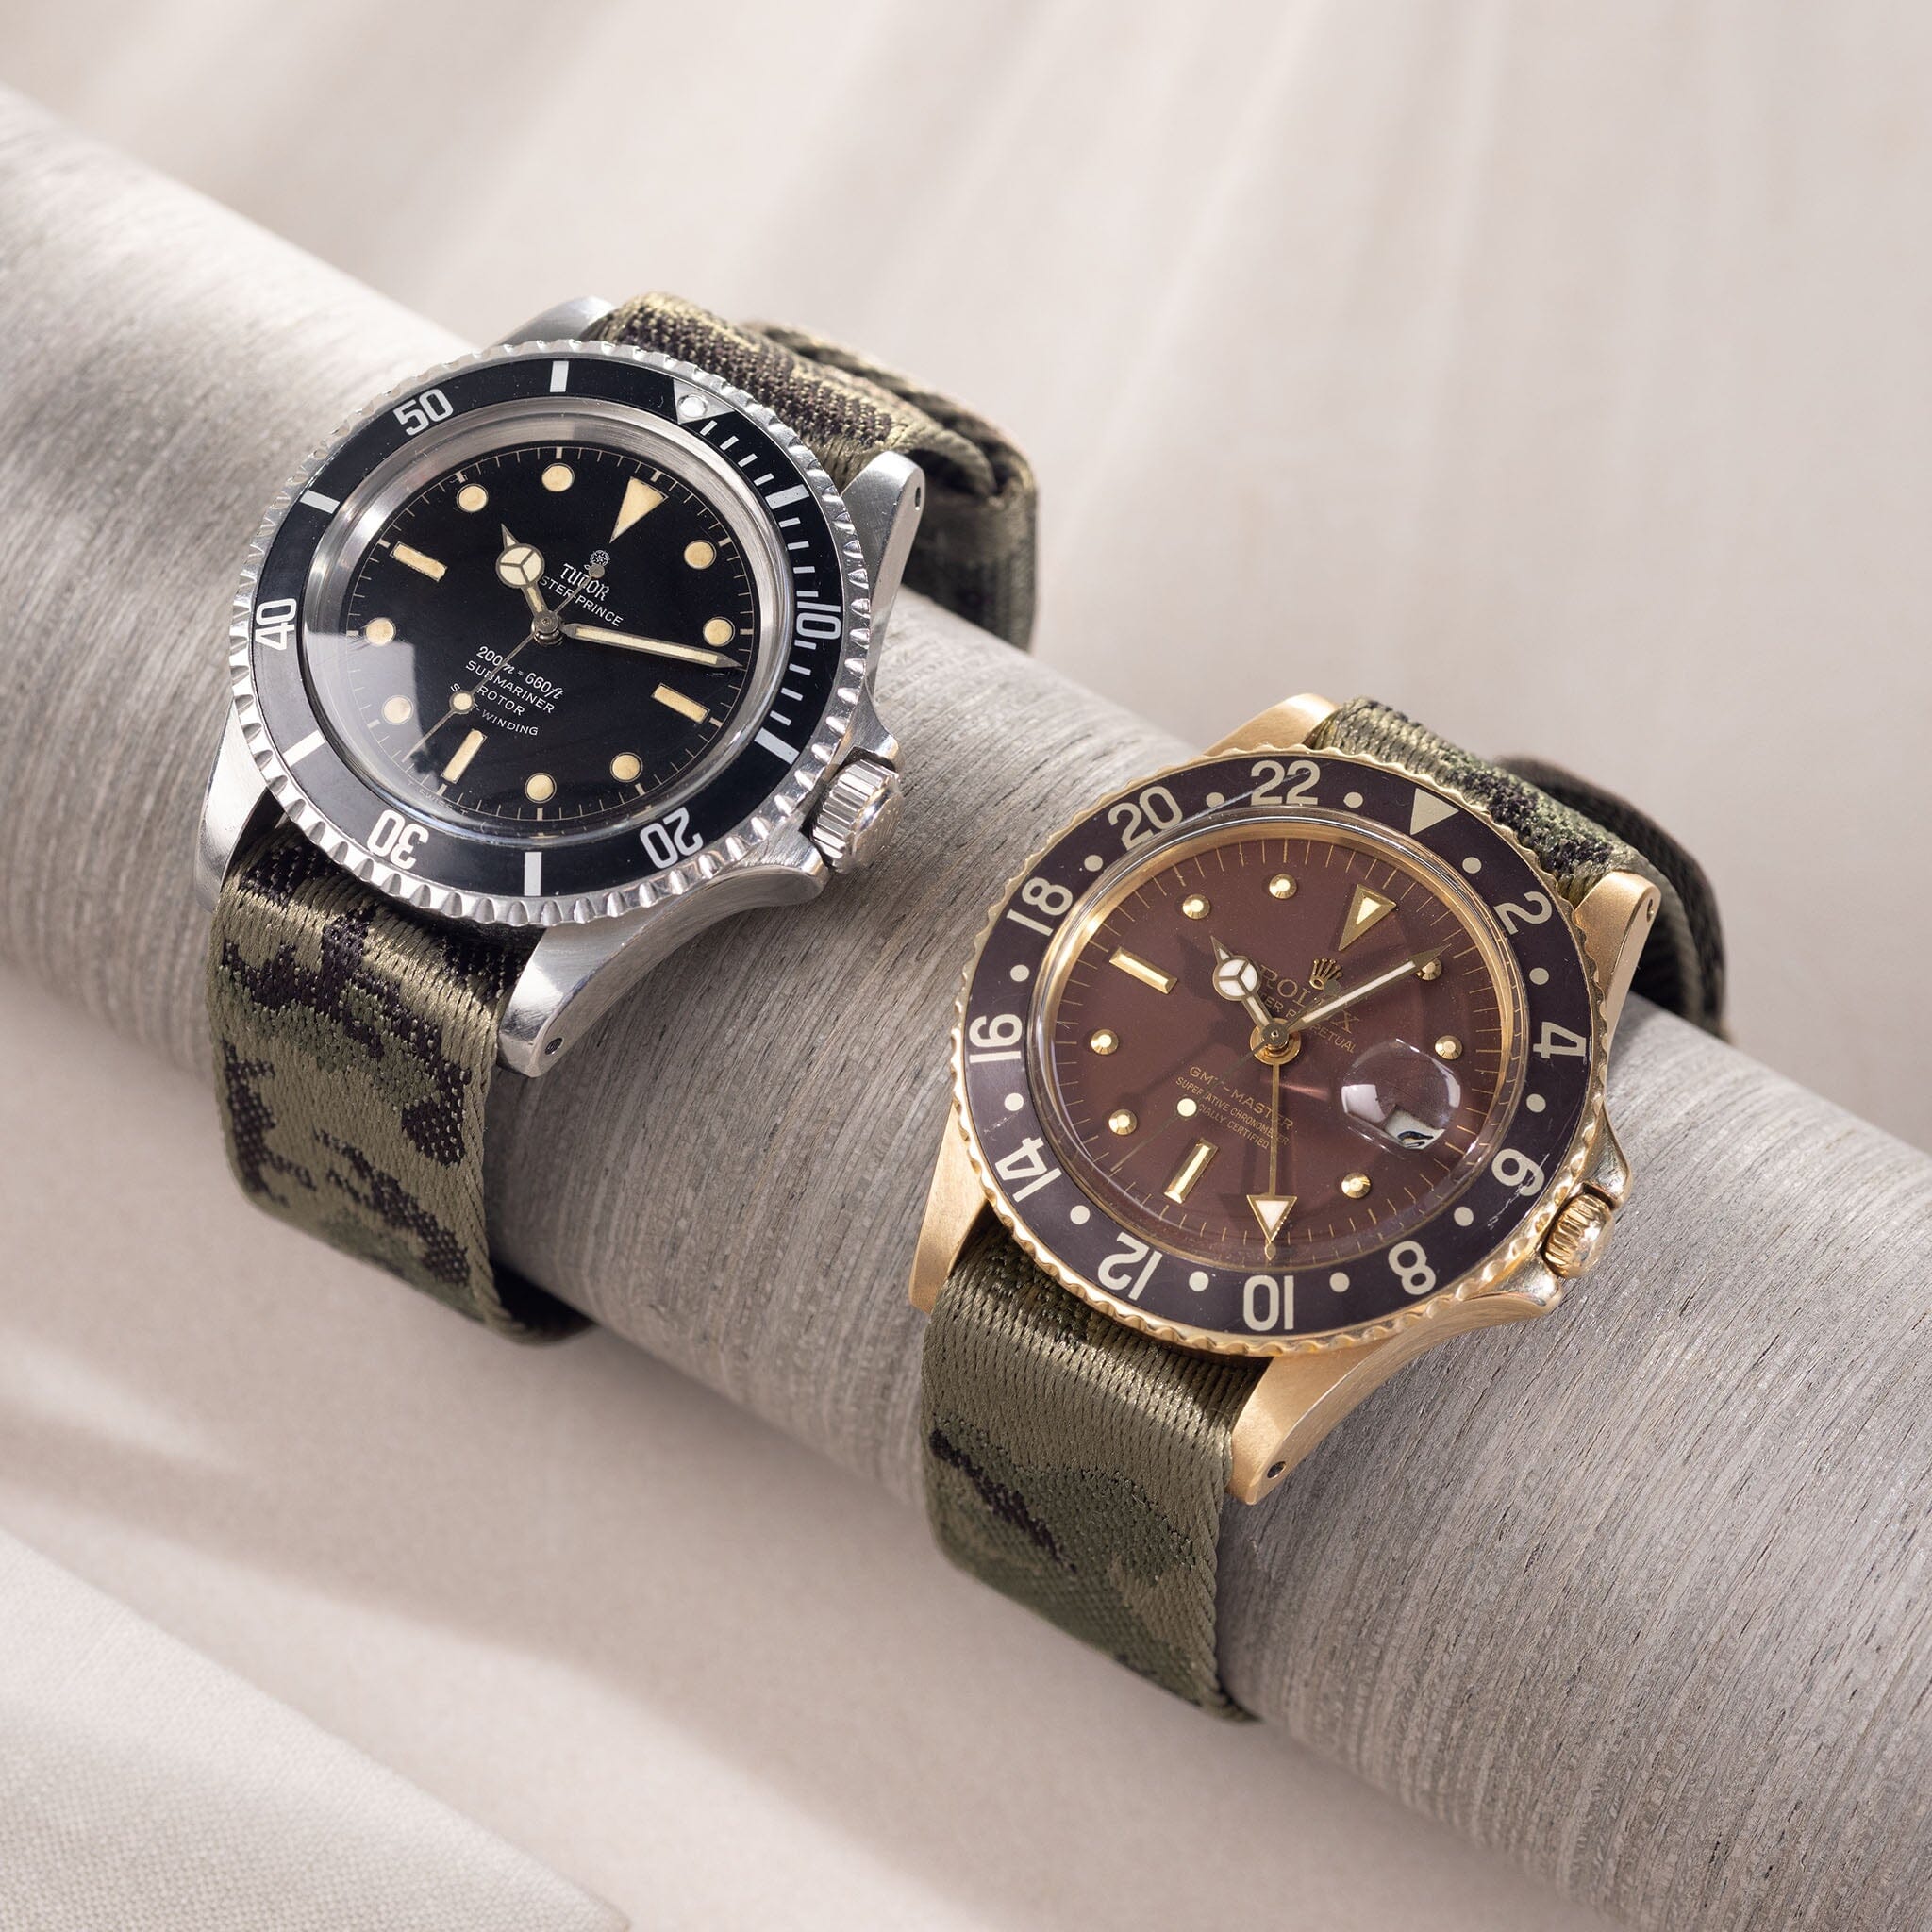 Camo Jacquard Nato Watch Strap For Rolex And Tudor Watches